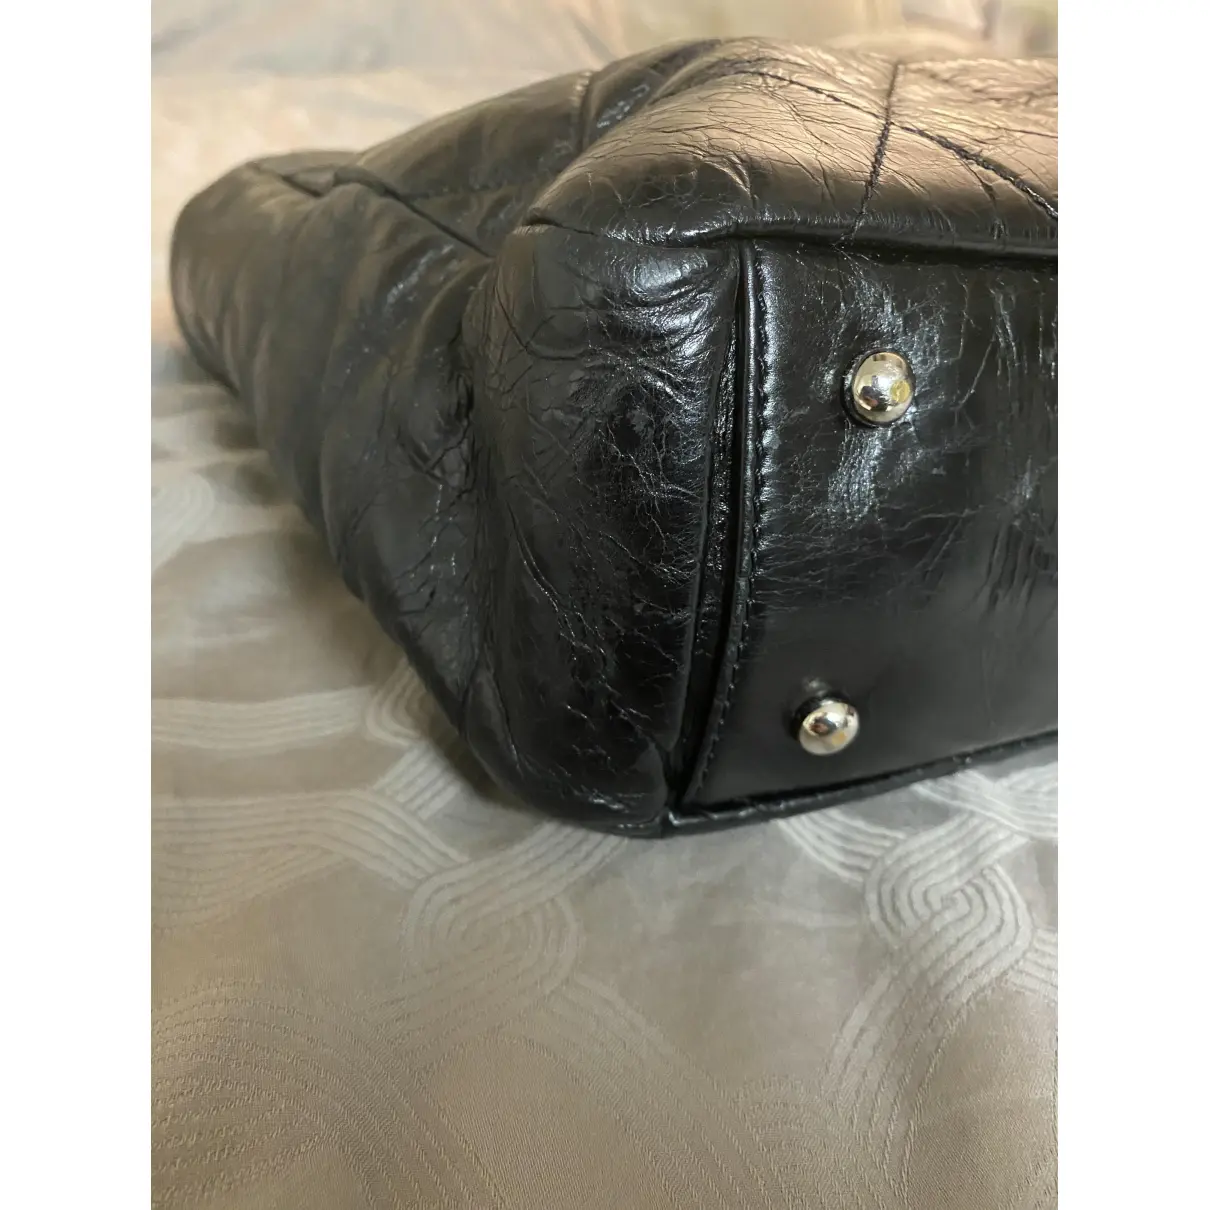 Buy Chanel Portobello leather handbag online